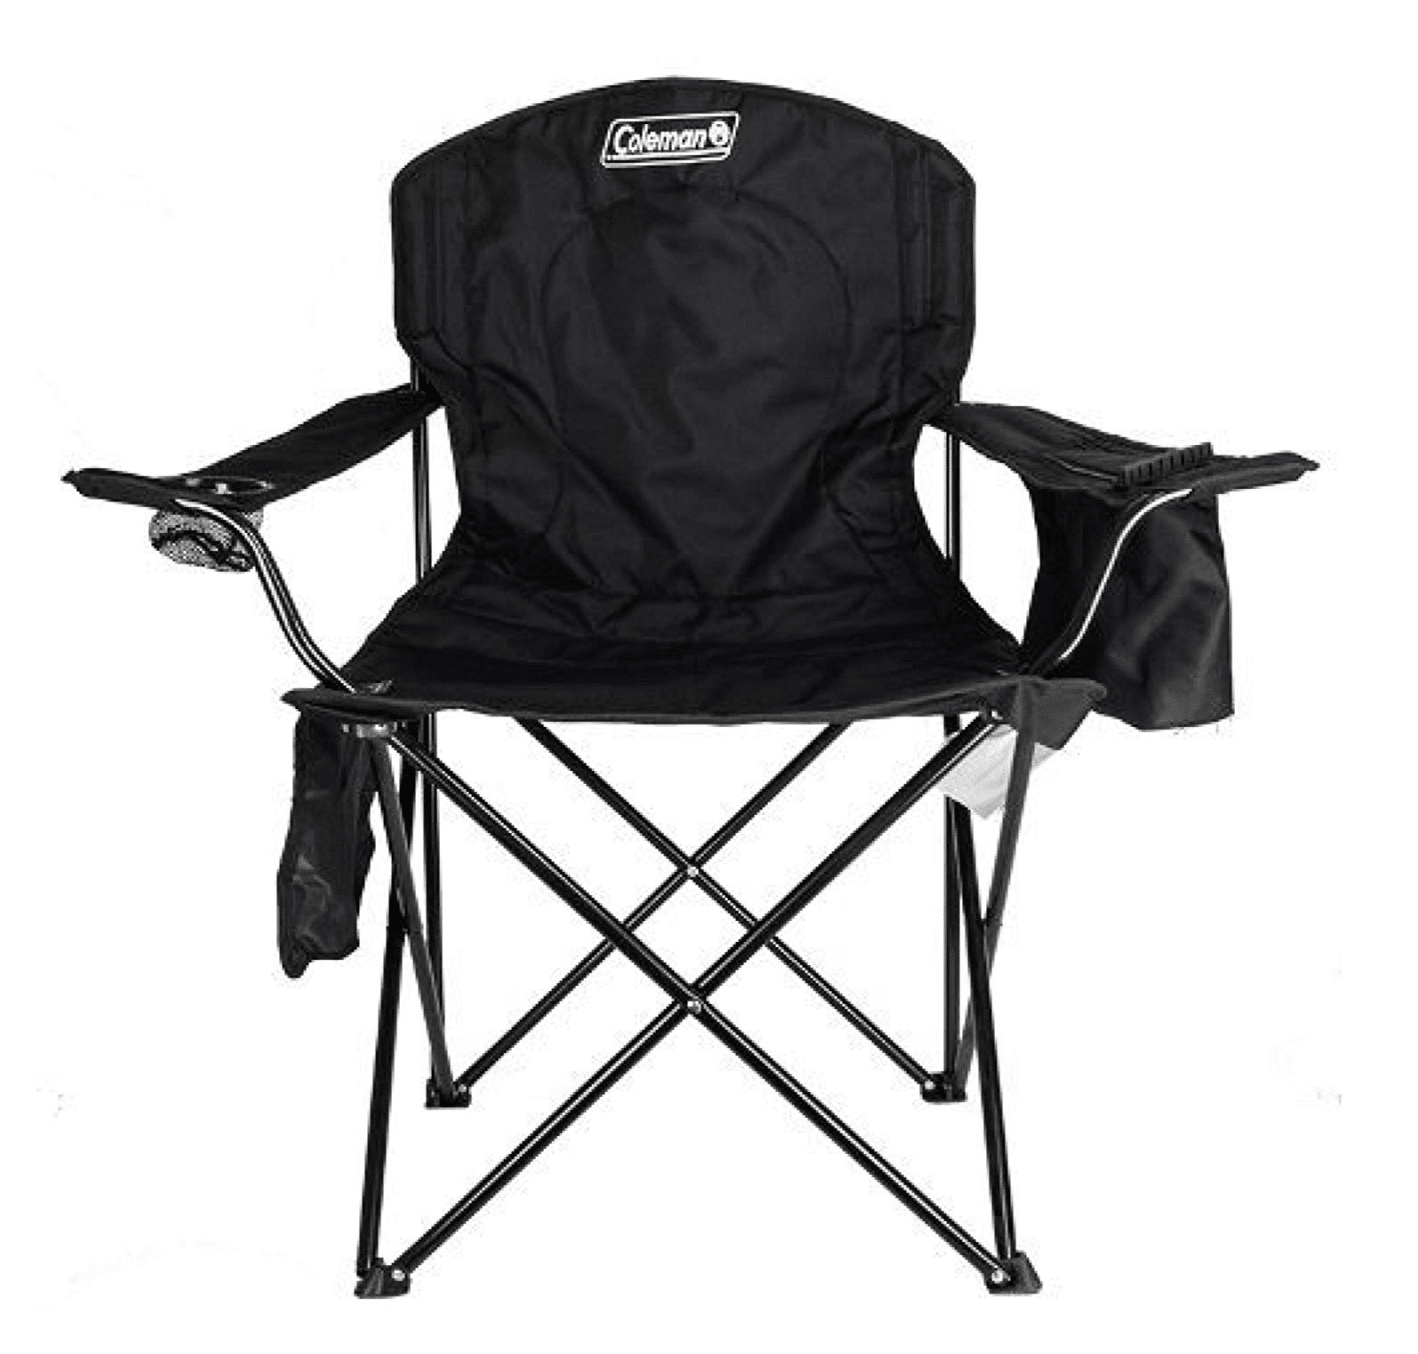 Black foldable chair